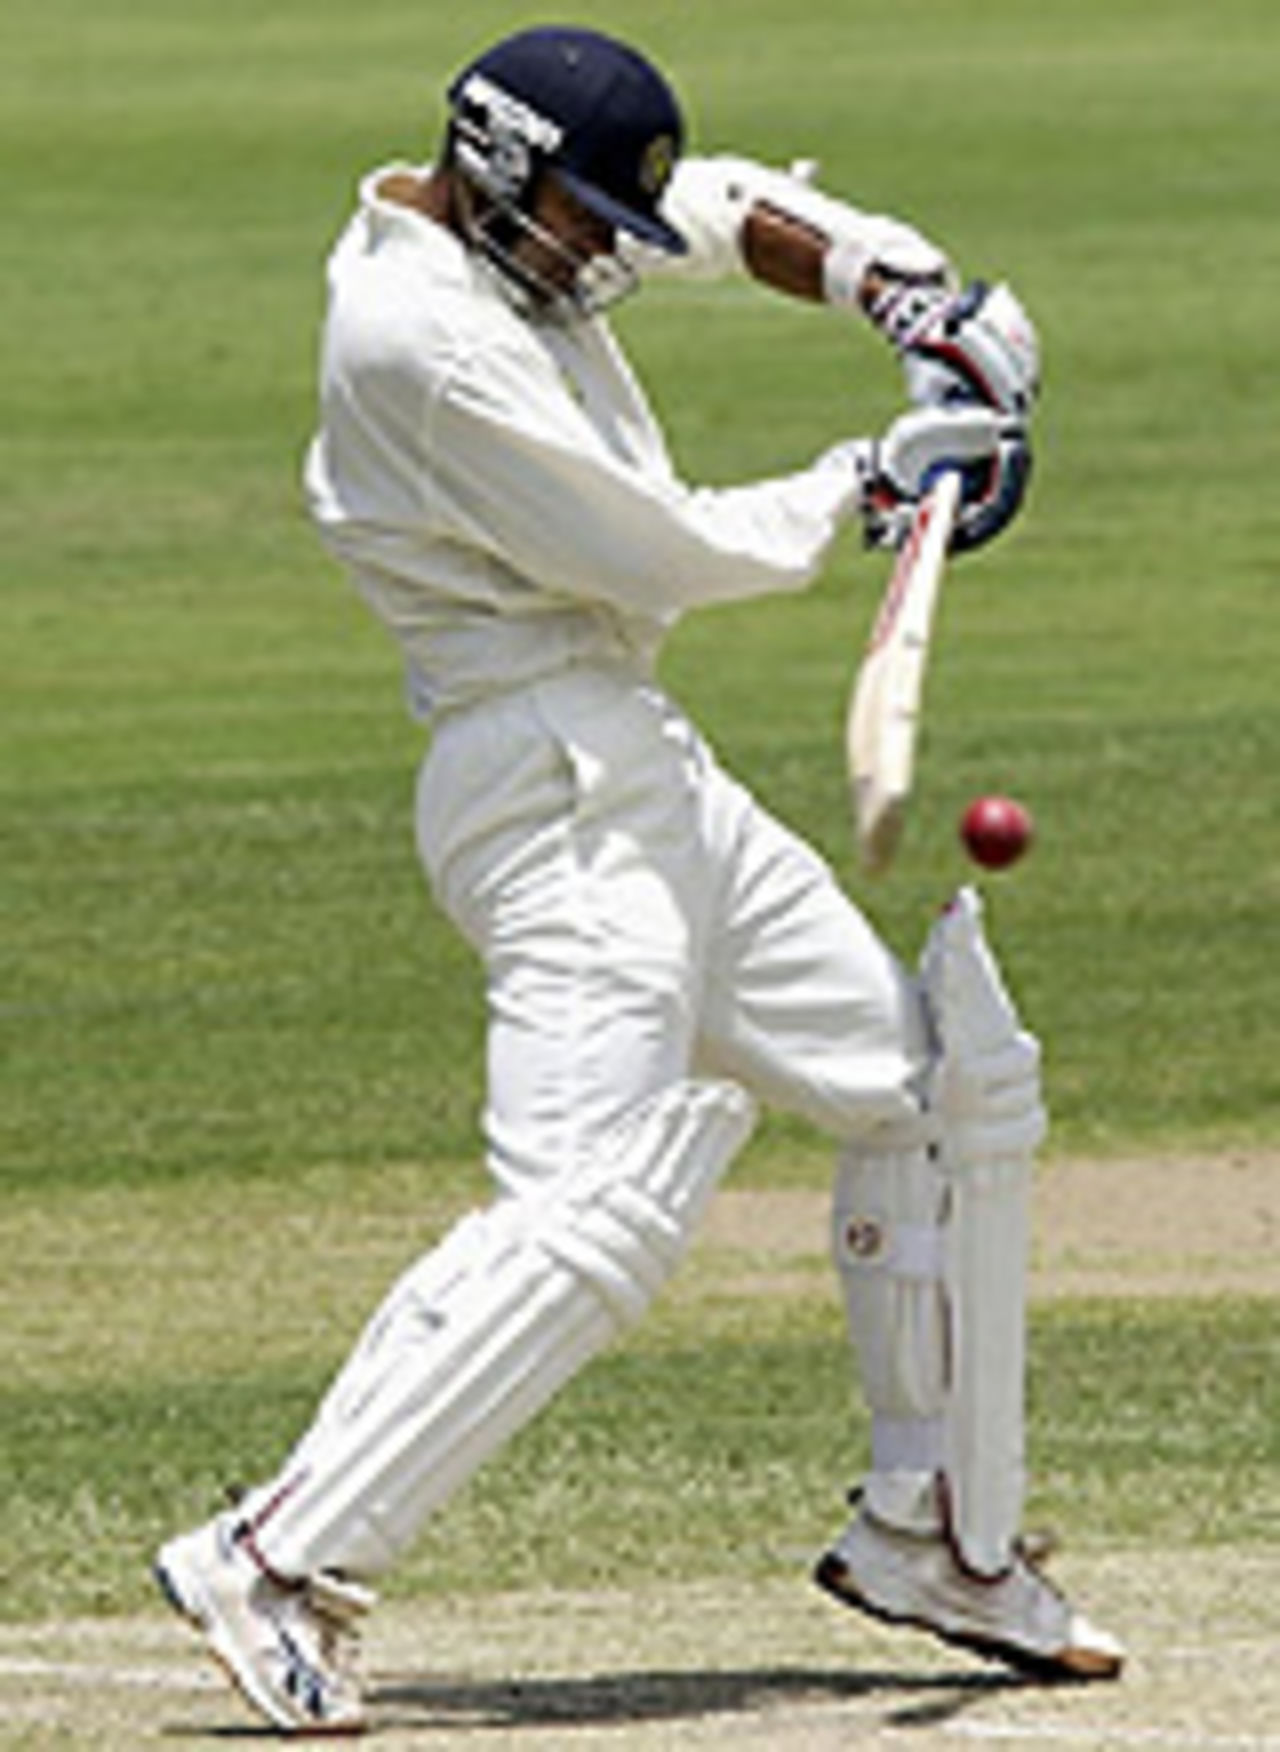 Rahul Dravid plays a forcing shot, Queensland Academy of Sports v Indians, Allan Border Field, Brisbane, November 30, 2003